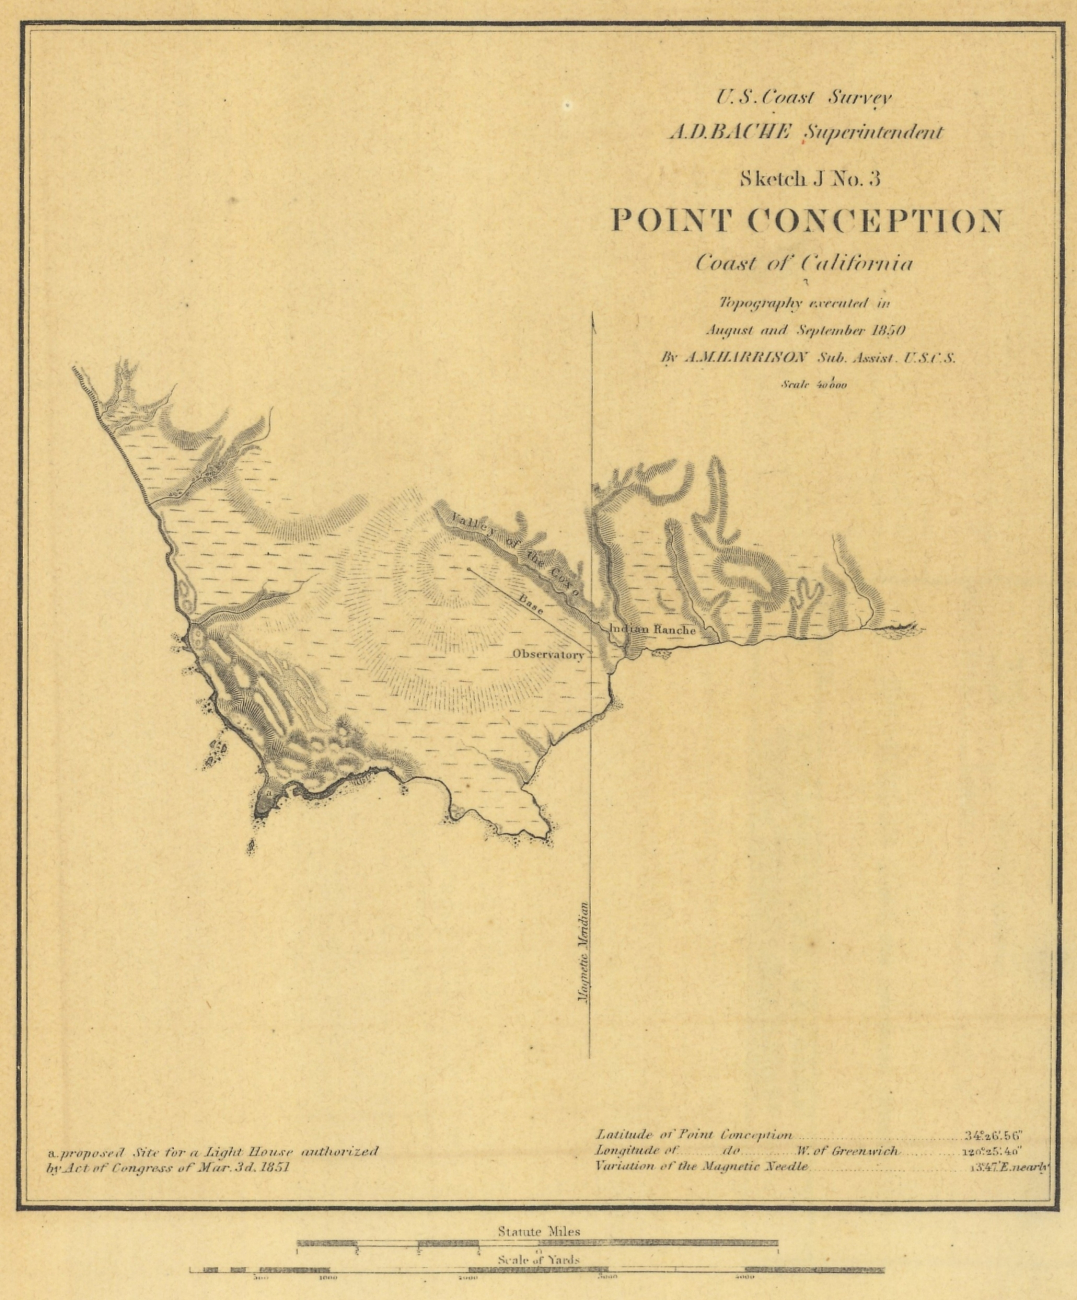 Annual Report 1850